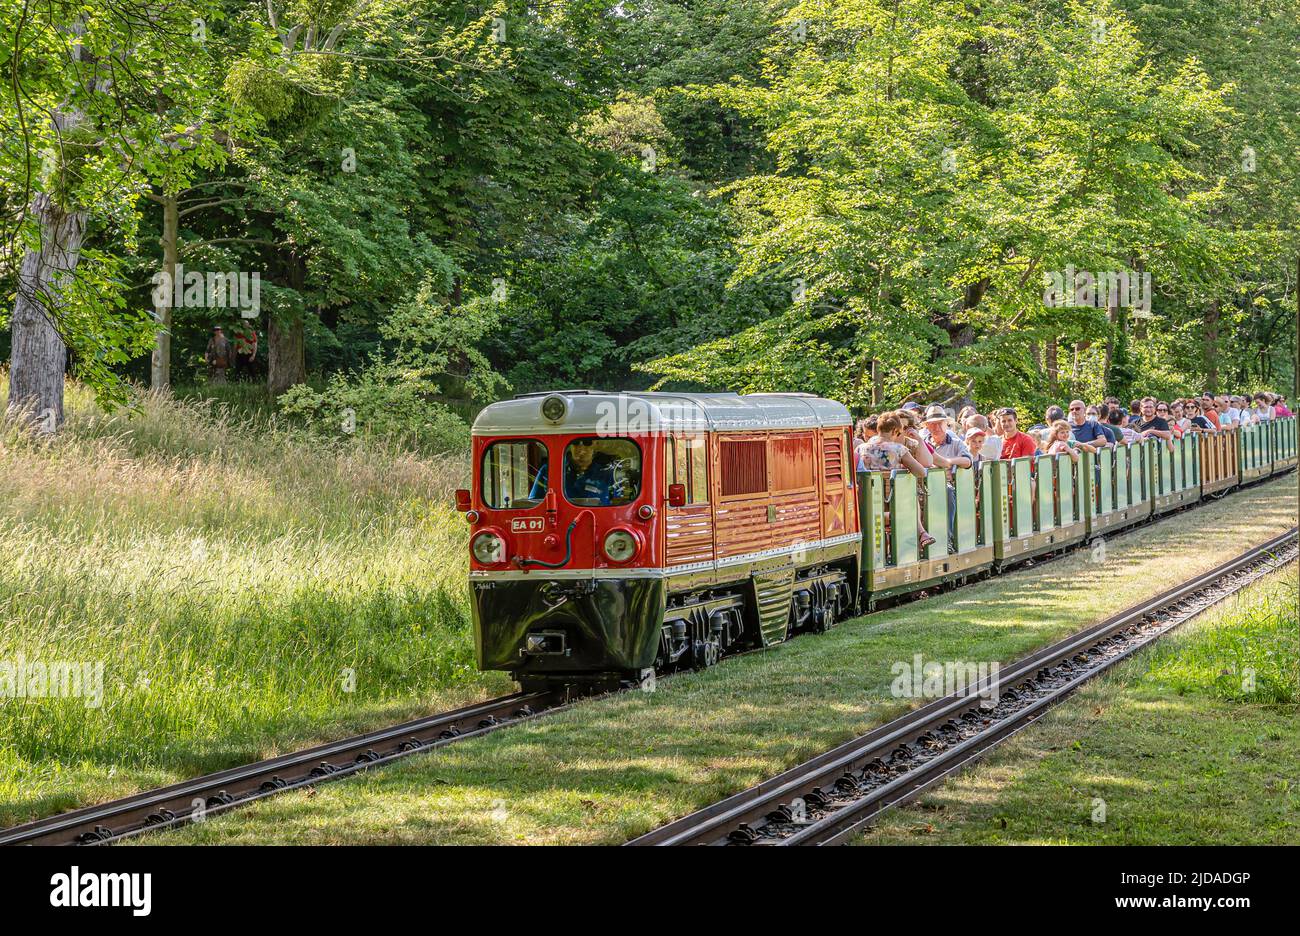 Miniature railway at the Grossen Garten, known as the Parkeisenbahn Dresden, Saxony, Germany Stock Photo